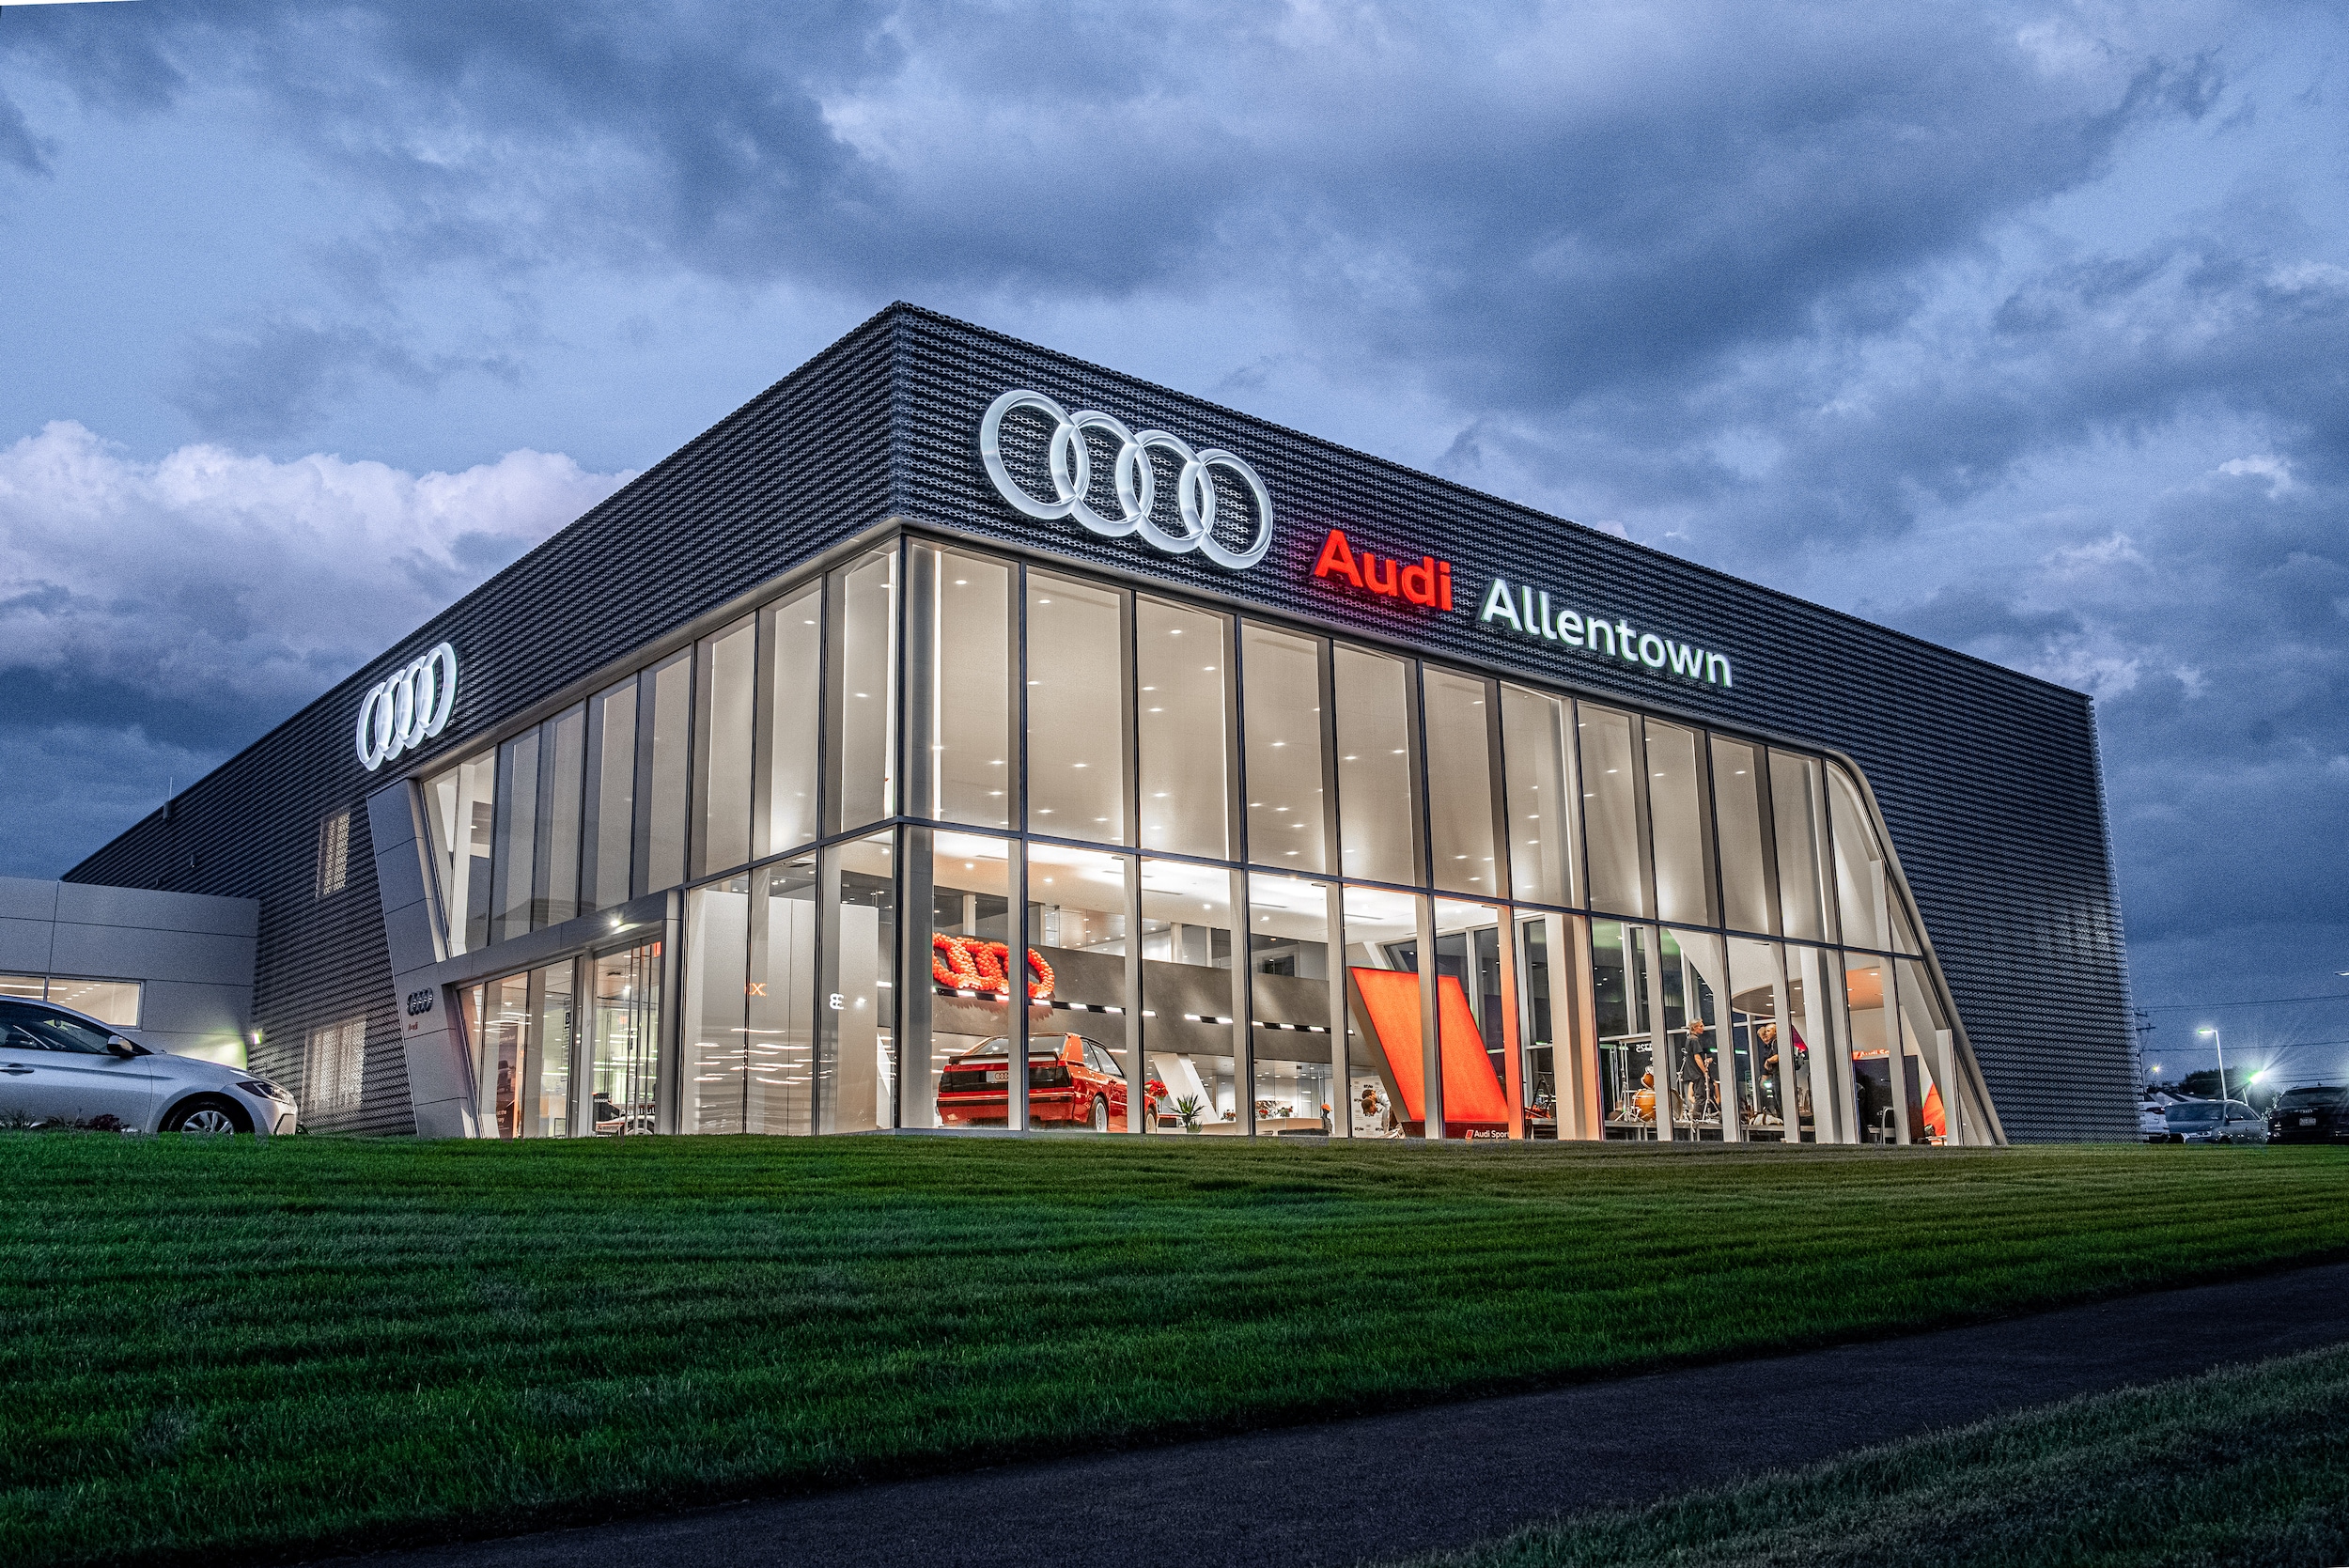 New Audi Peninsula Incentives